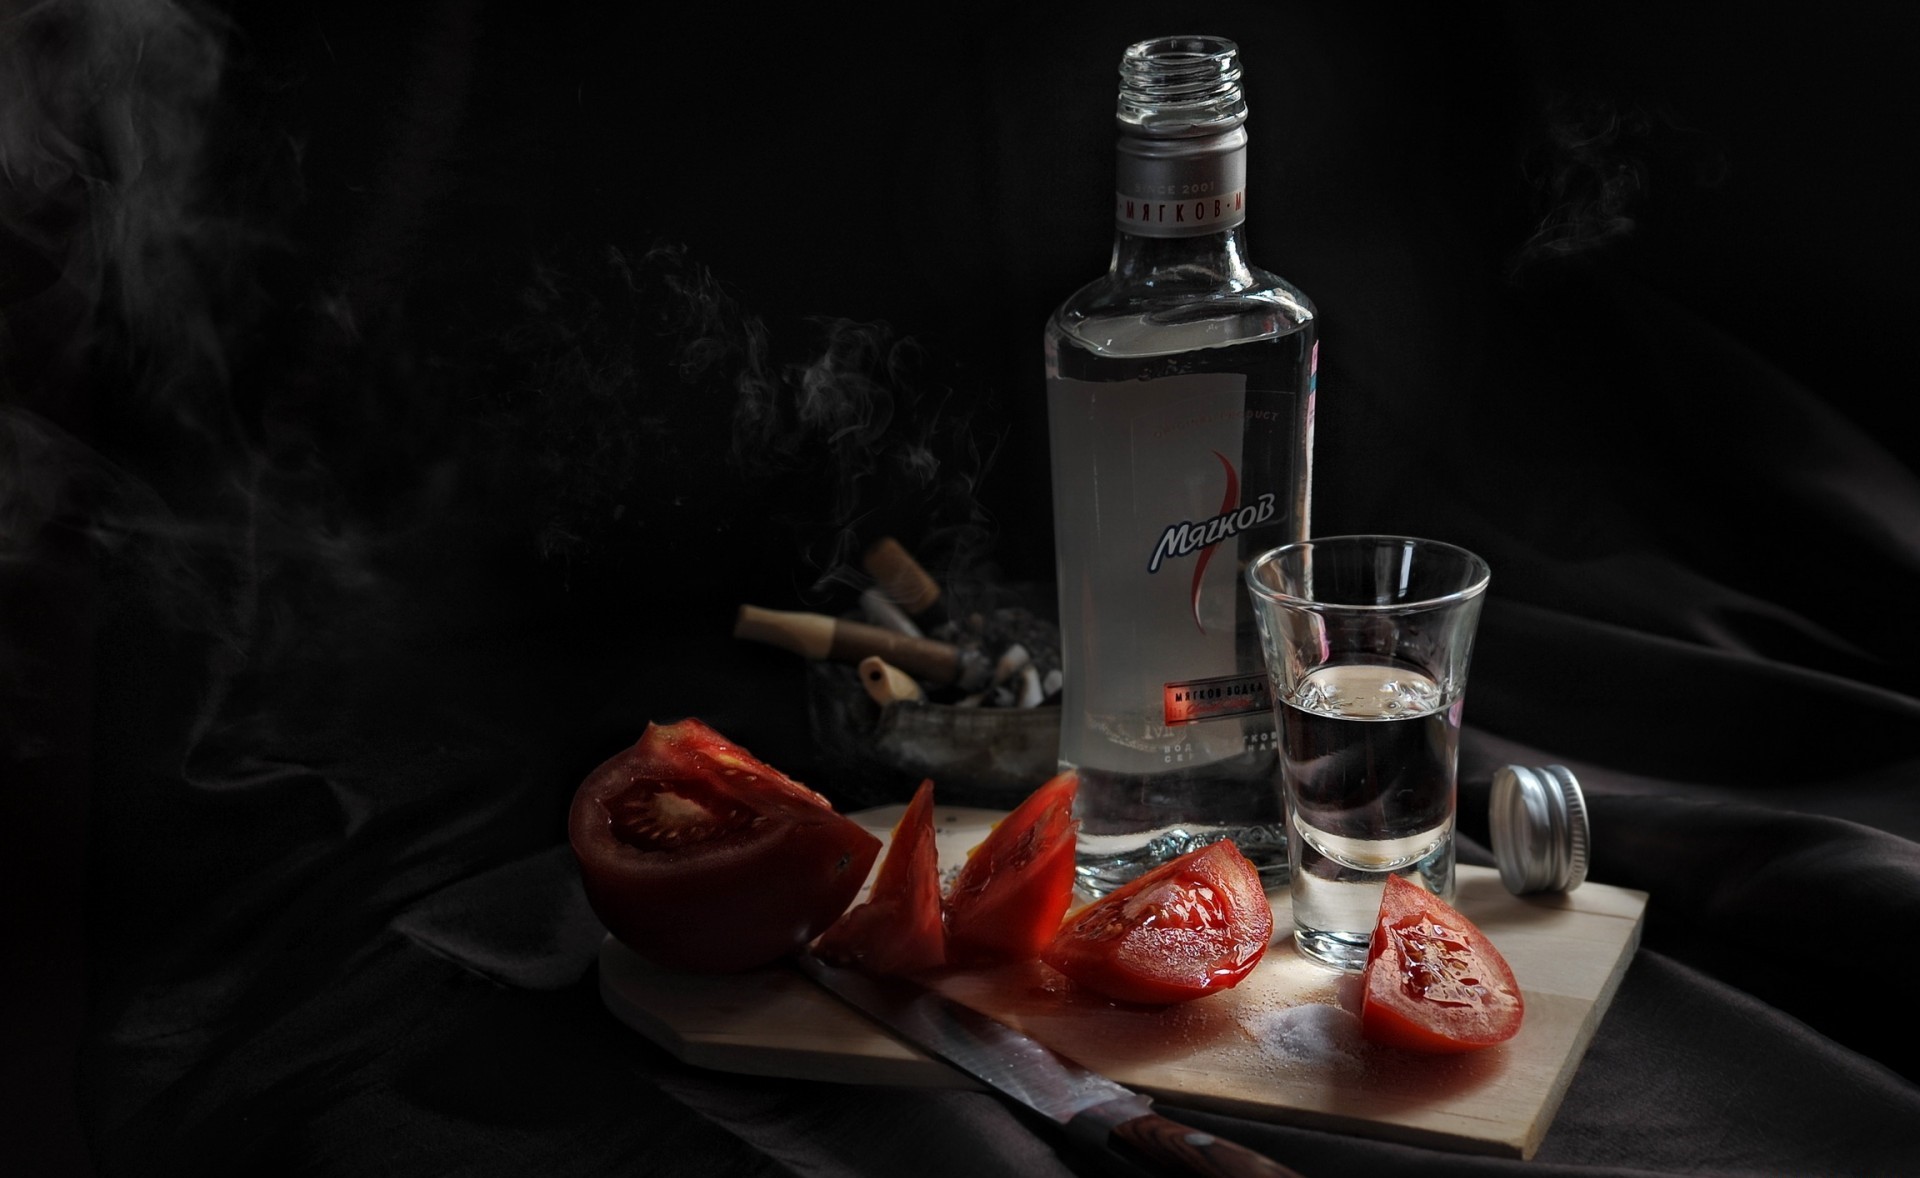 General 1920x1178 tomatoes alcohol food bottles vegetables still life knife vodka Russian